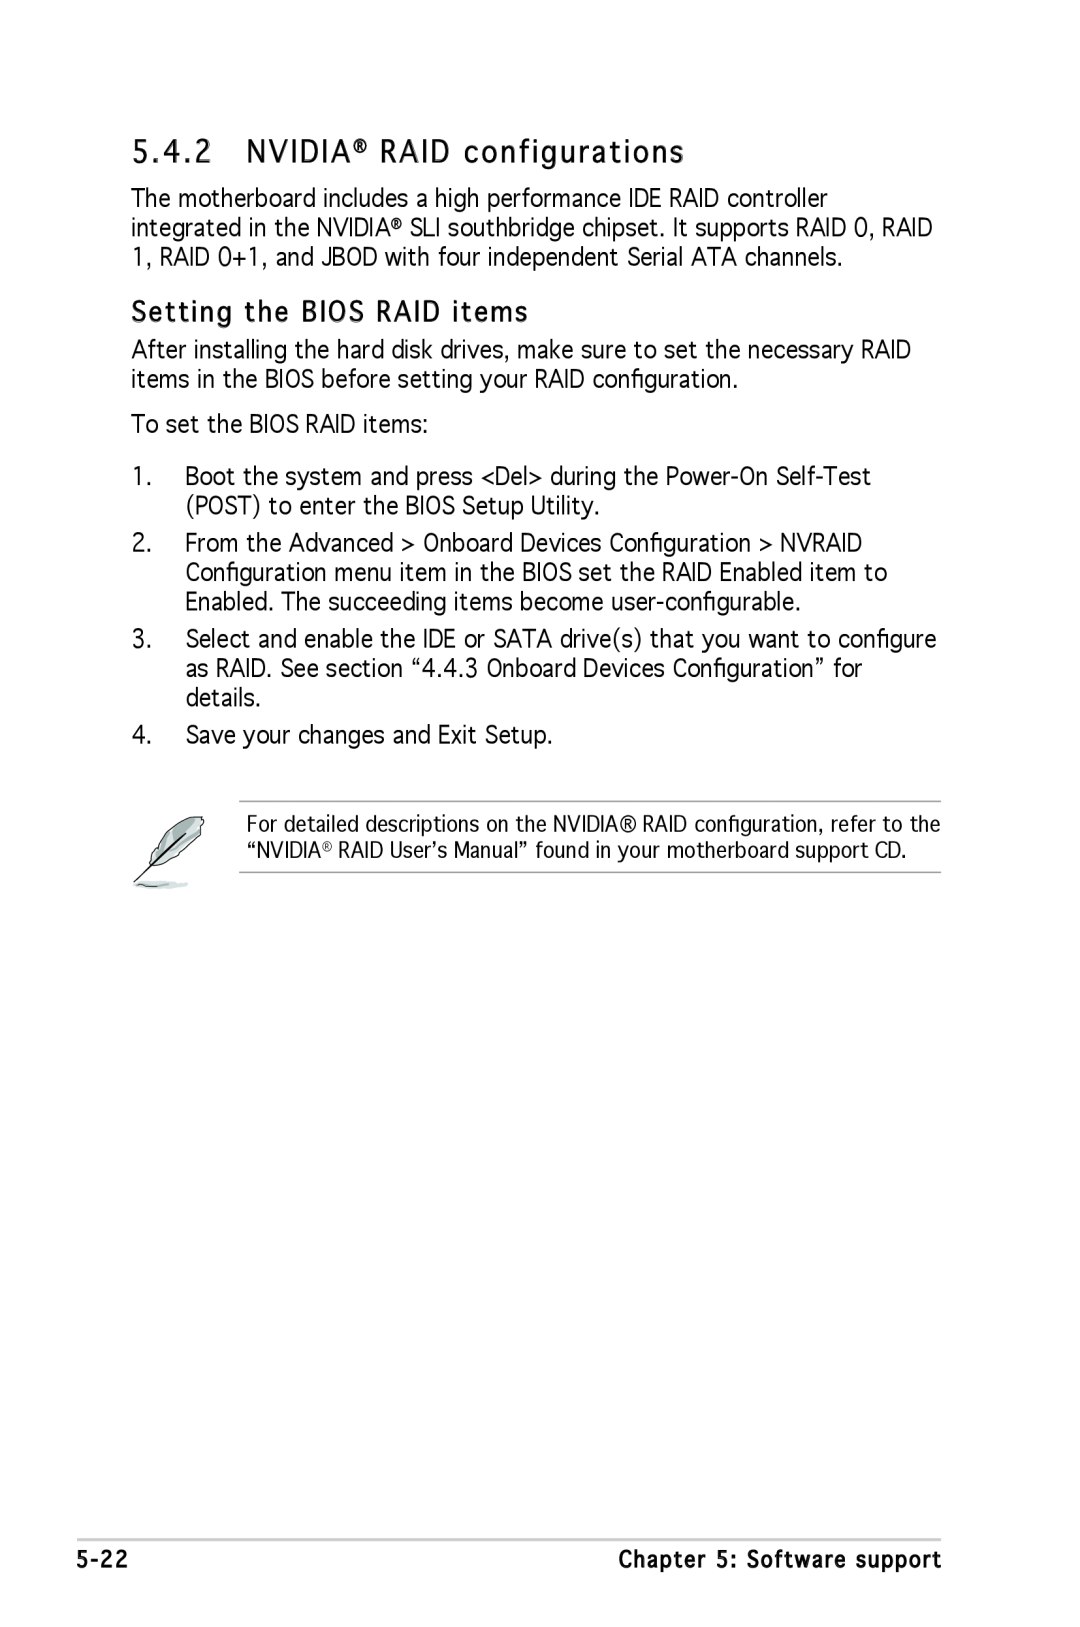 Asus A8N-SLI SE manual NVIDIA RAID configurations, Setting the BIOS RAID items 